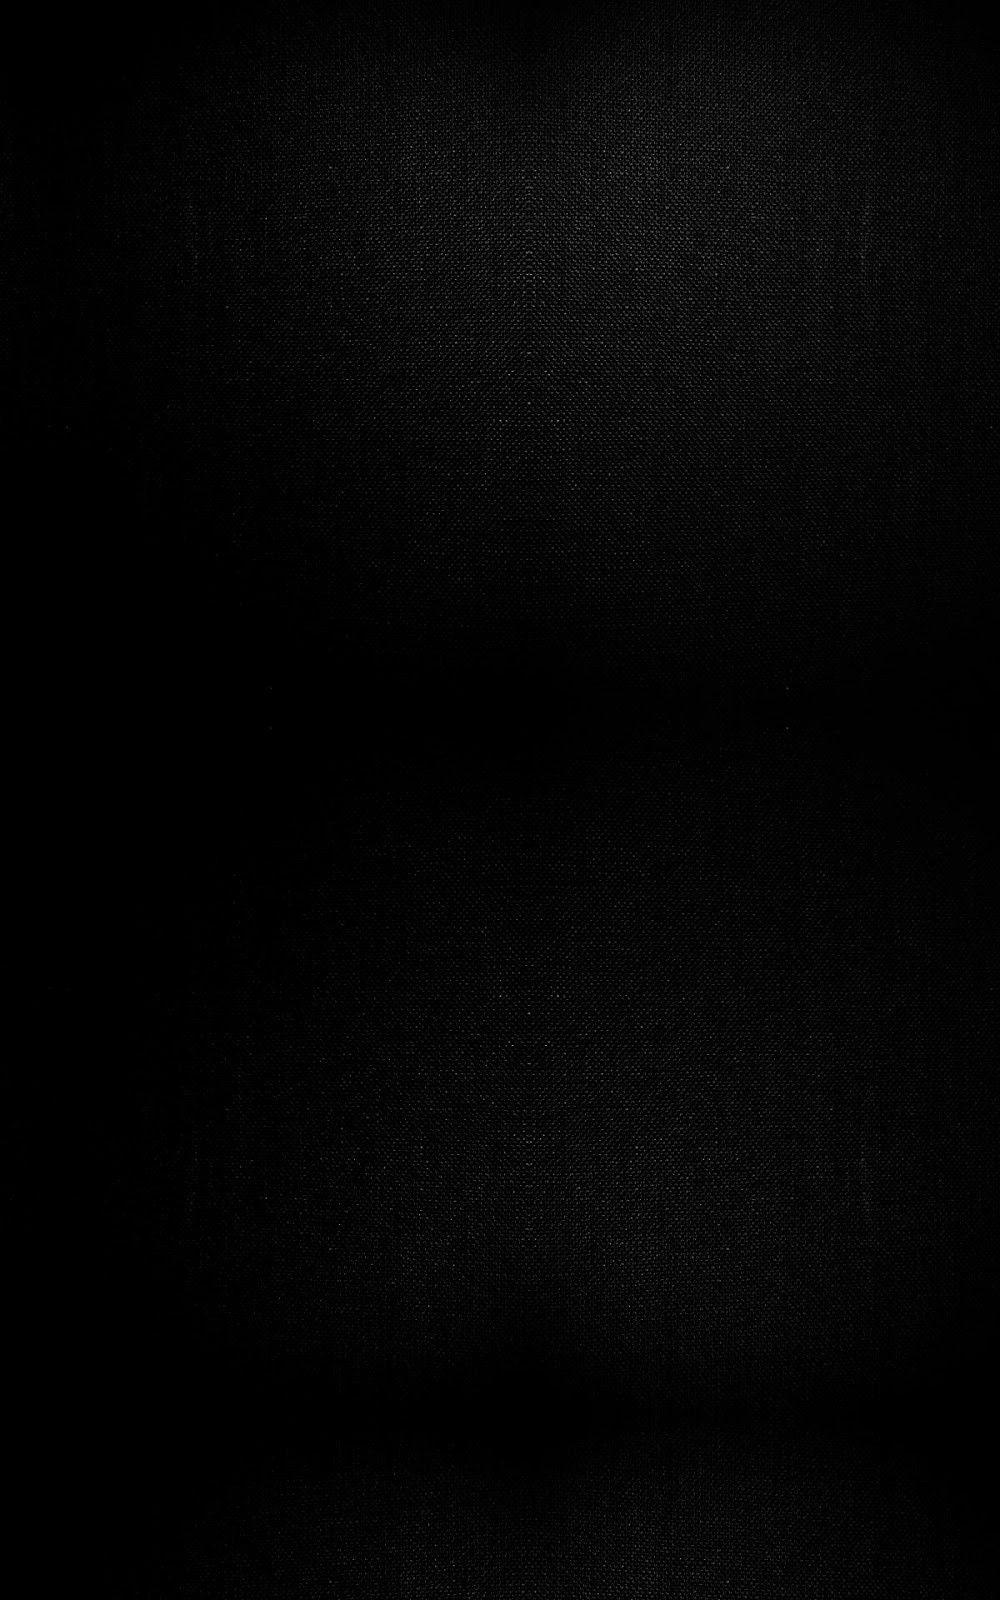 minimalist iphone wallpaper black and white